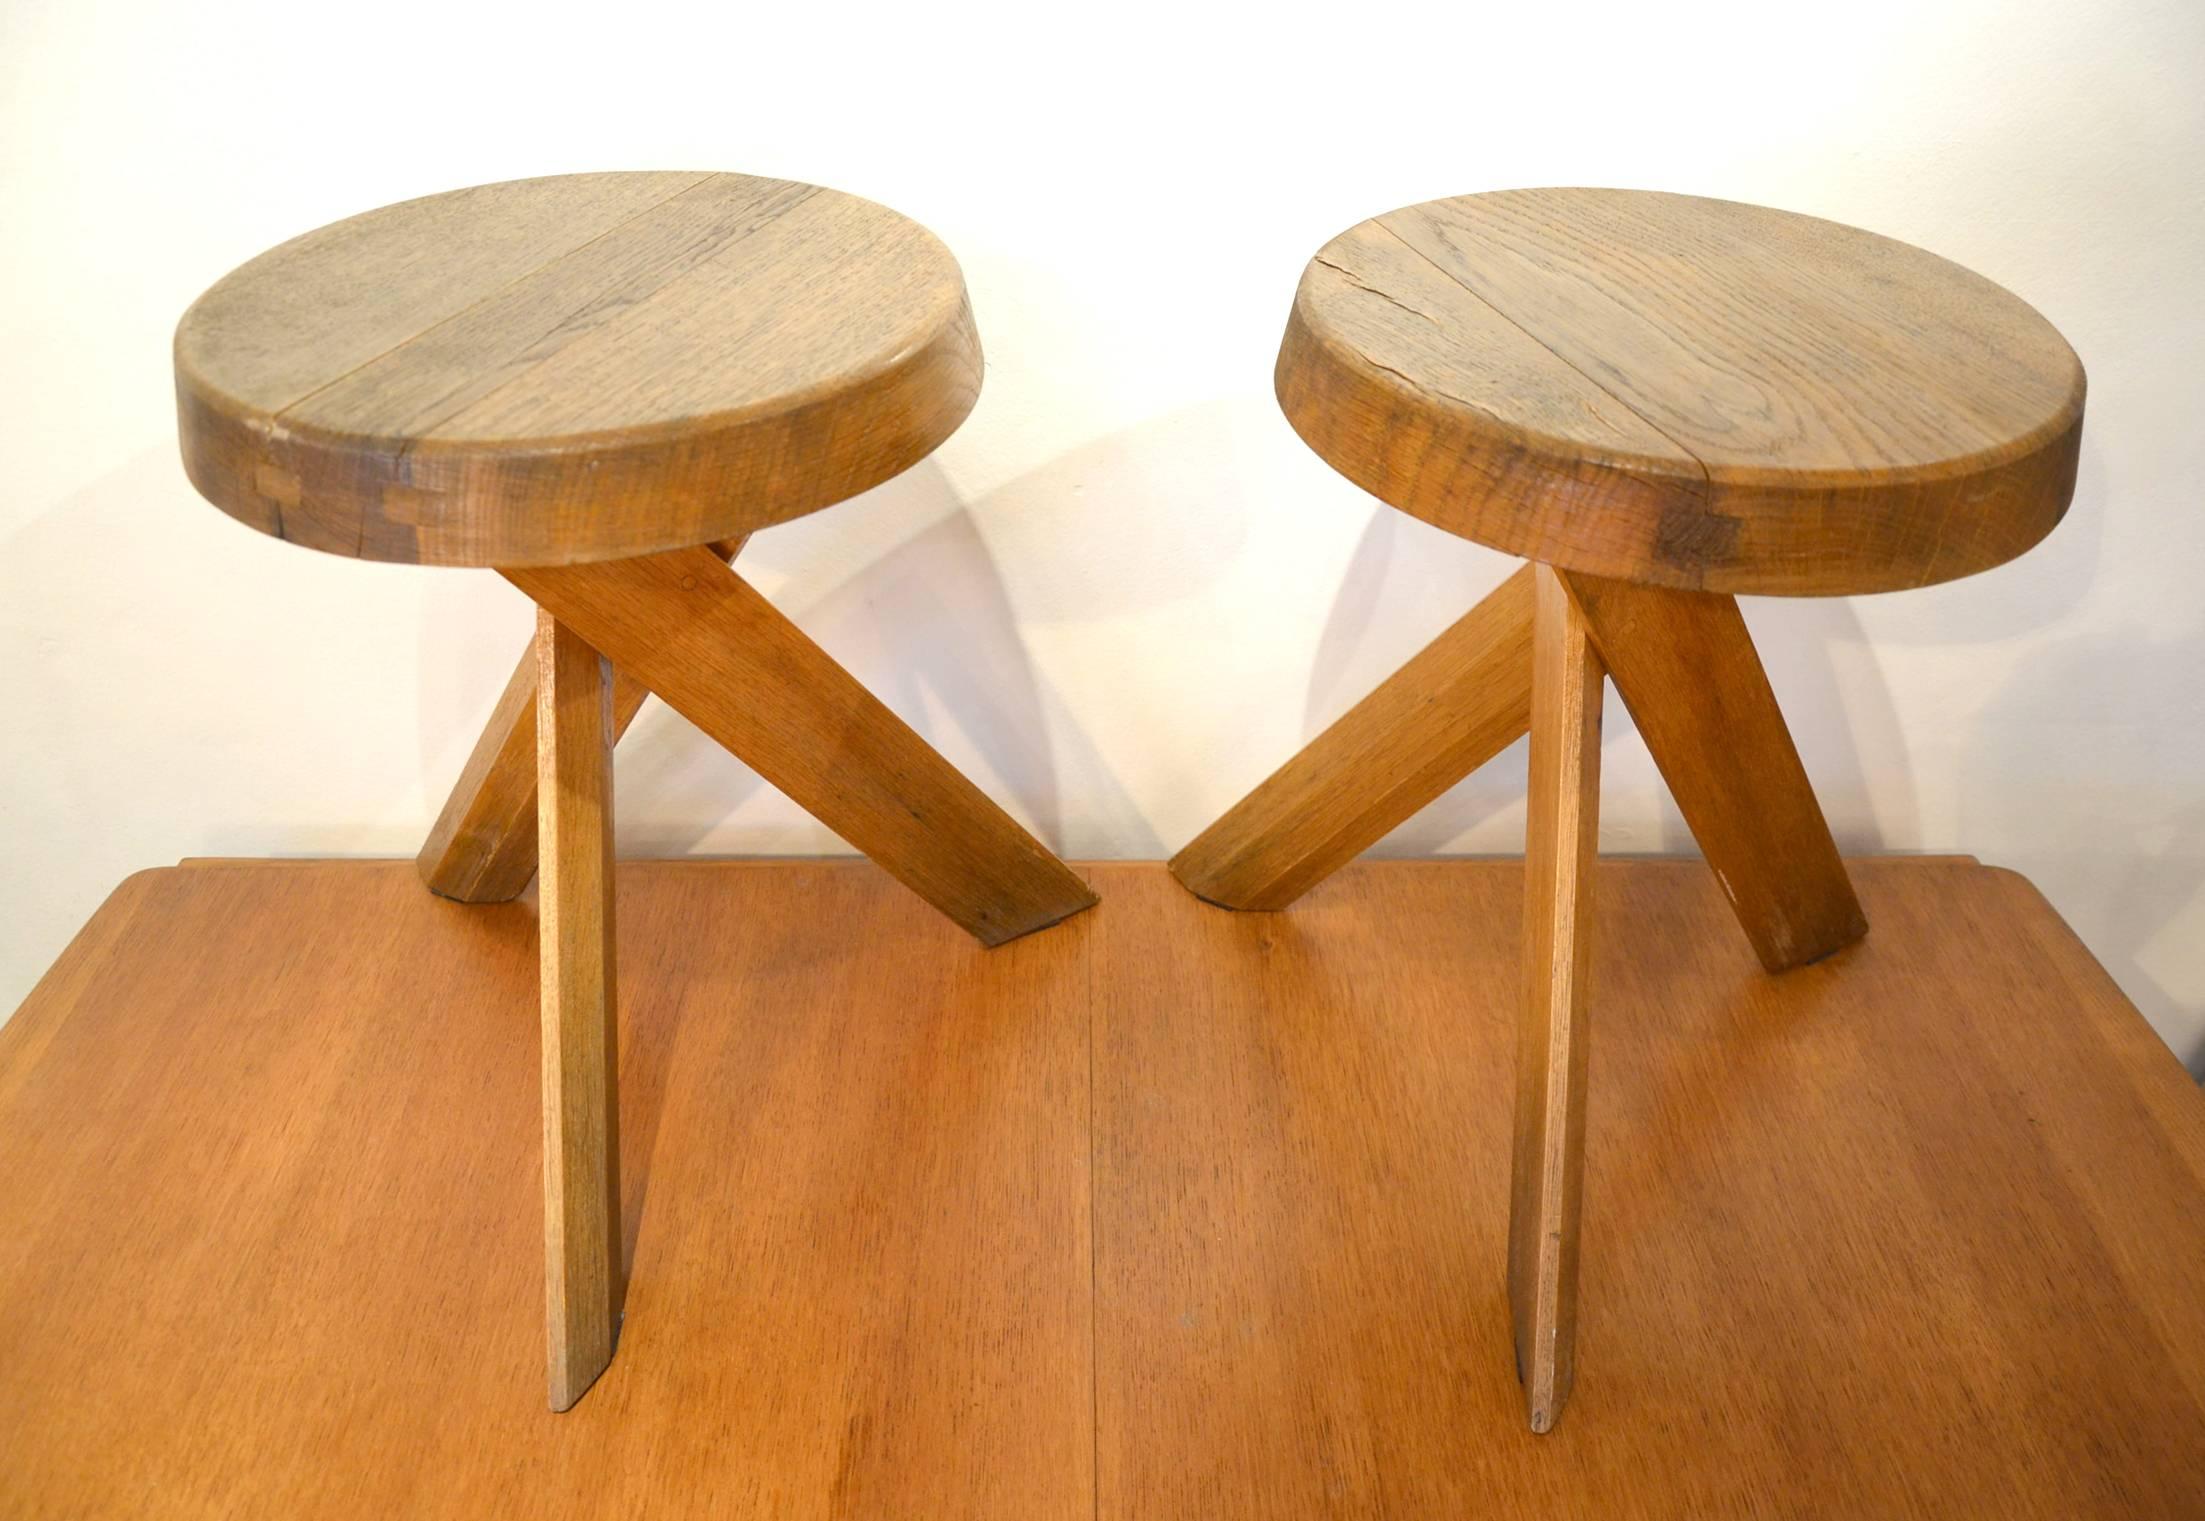 Pierre Chapo S31 pair of stools, circa 1950.
Beautiful tripod twisted legs.